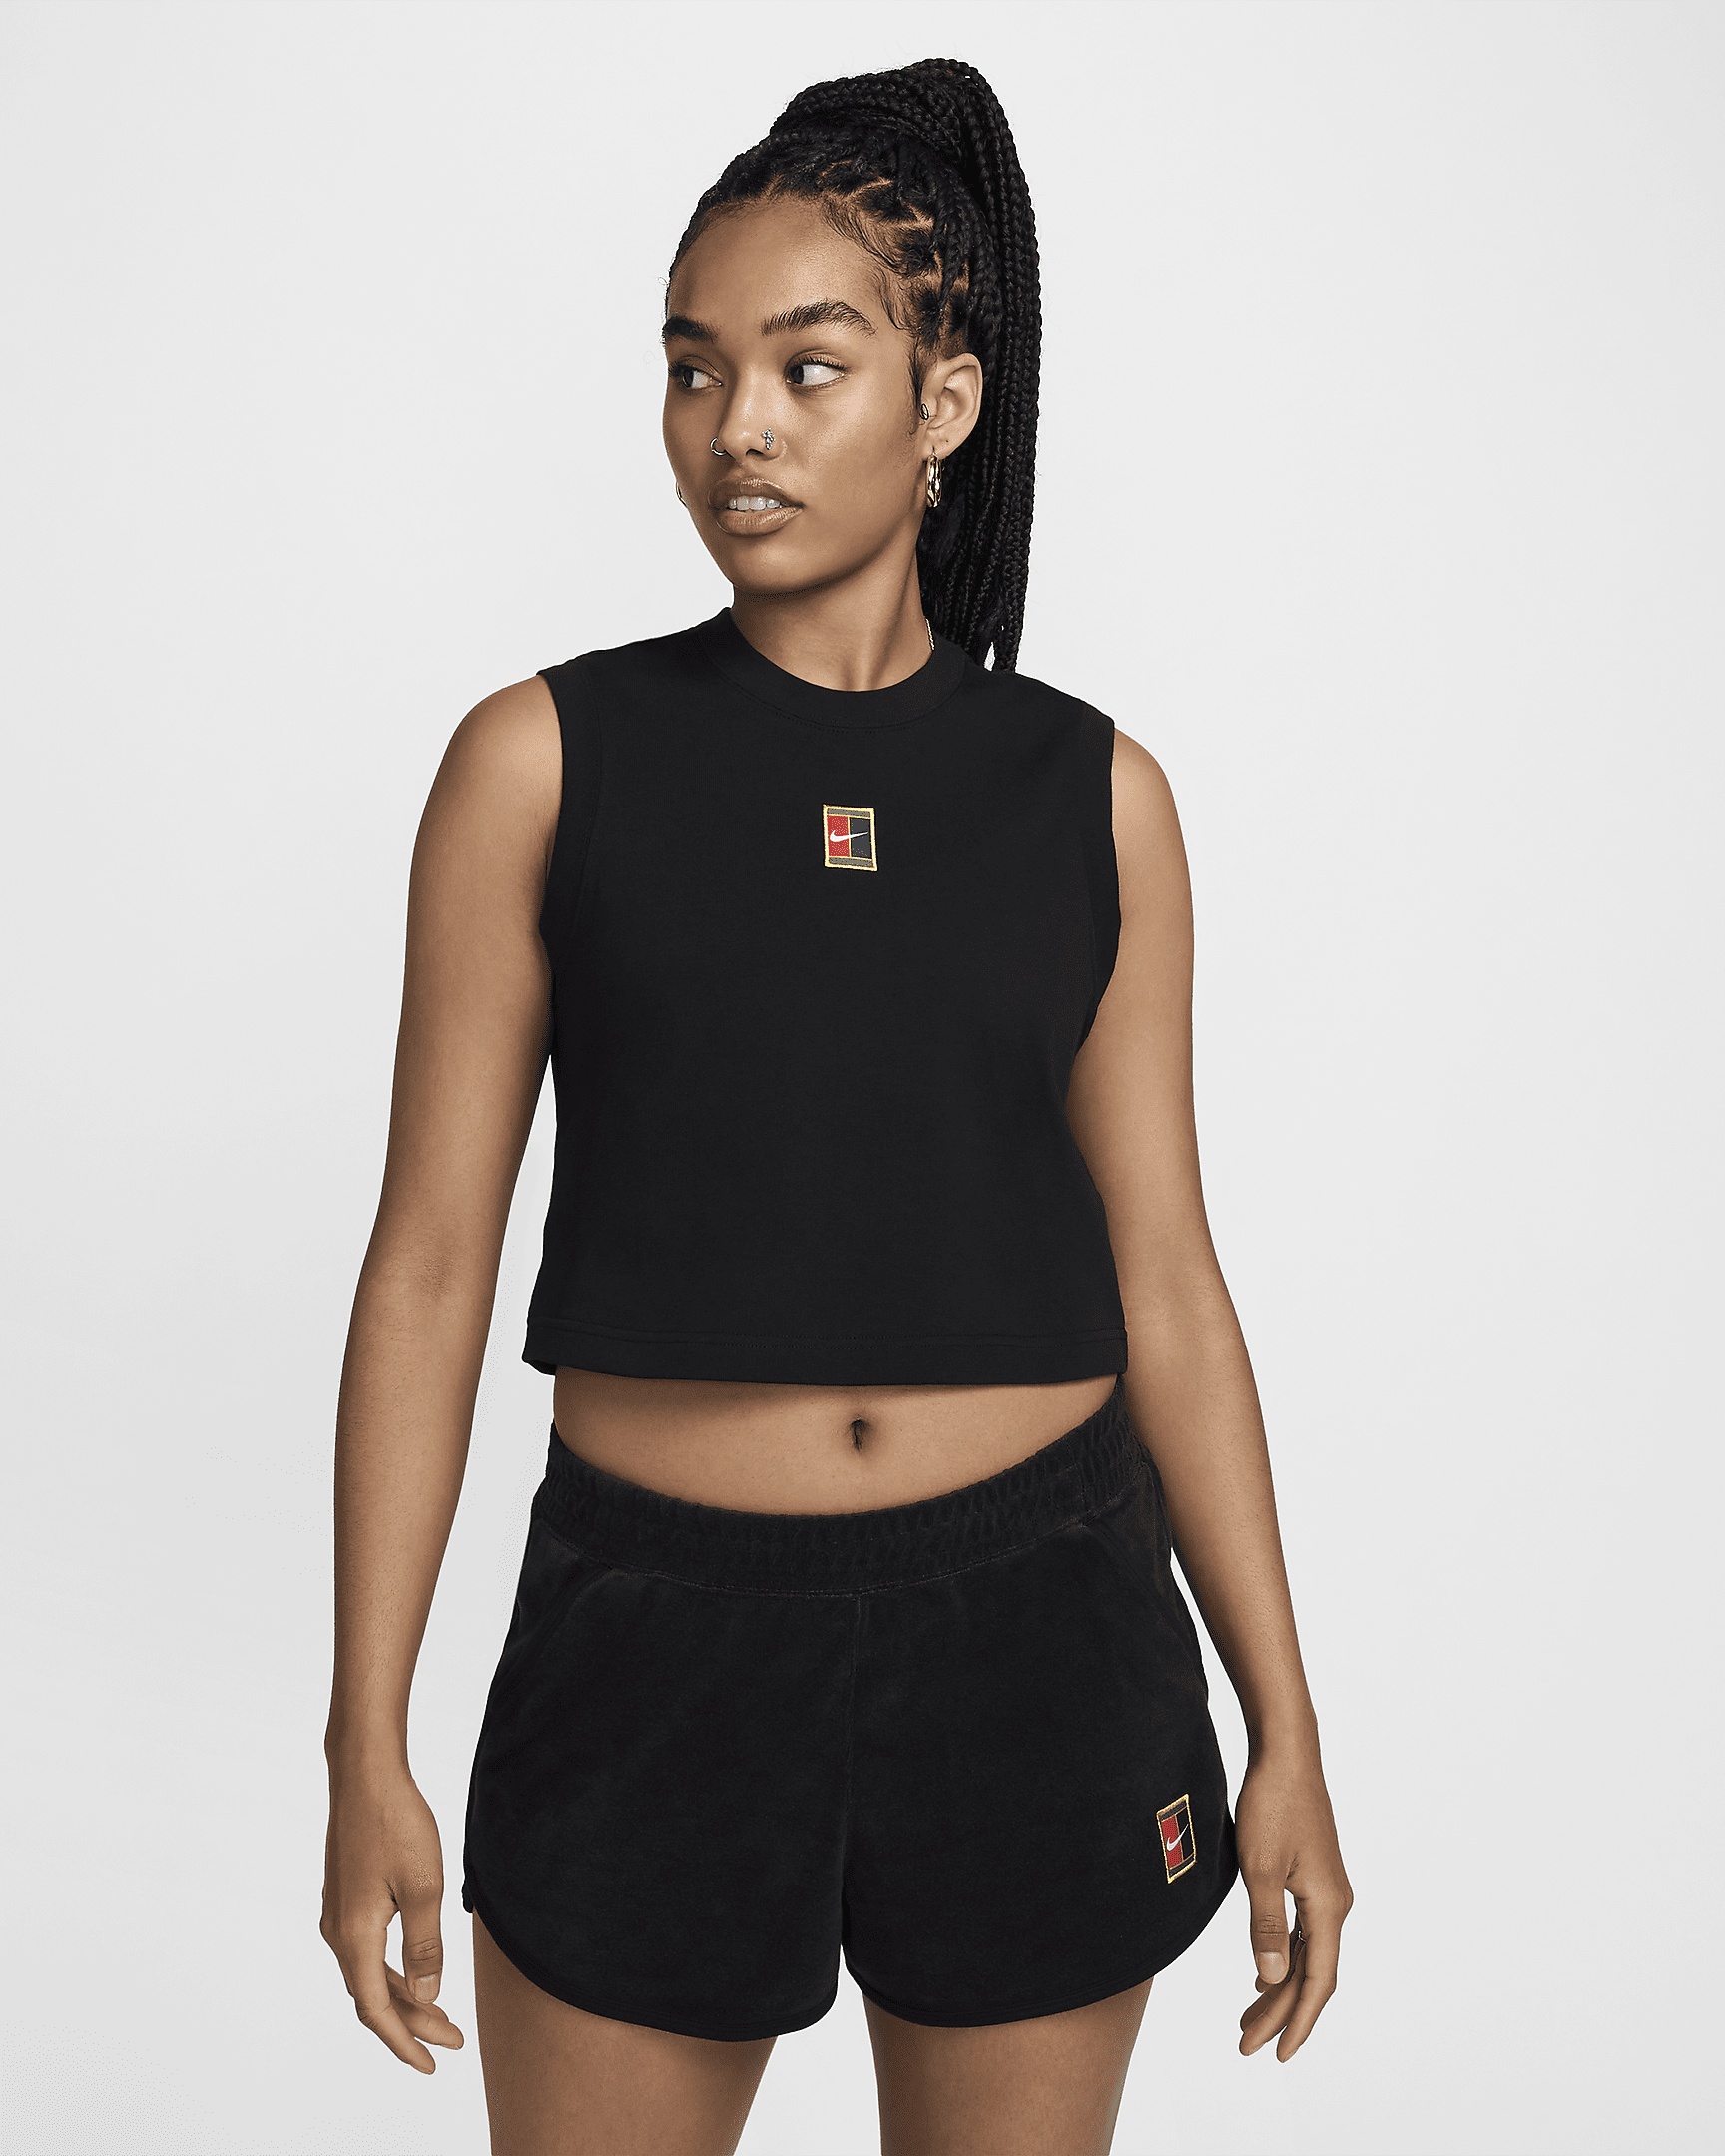 Nike Women's Court Heritage Cropped Tennis Tank Top - 1